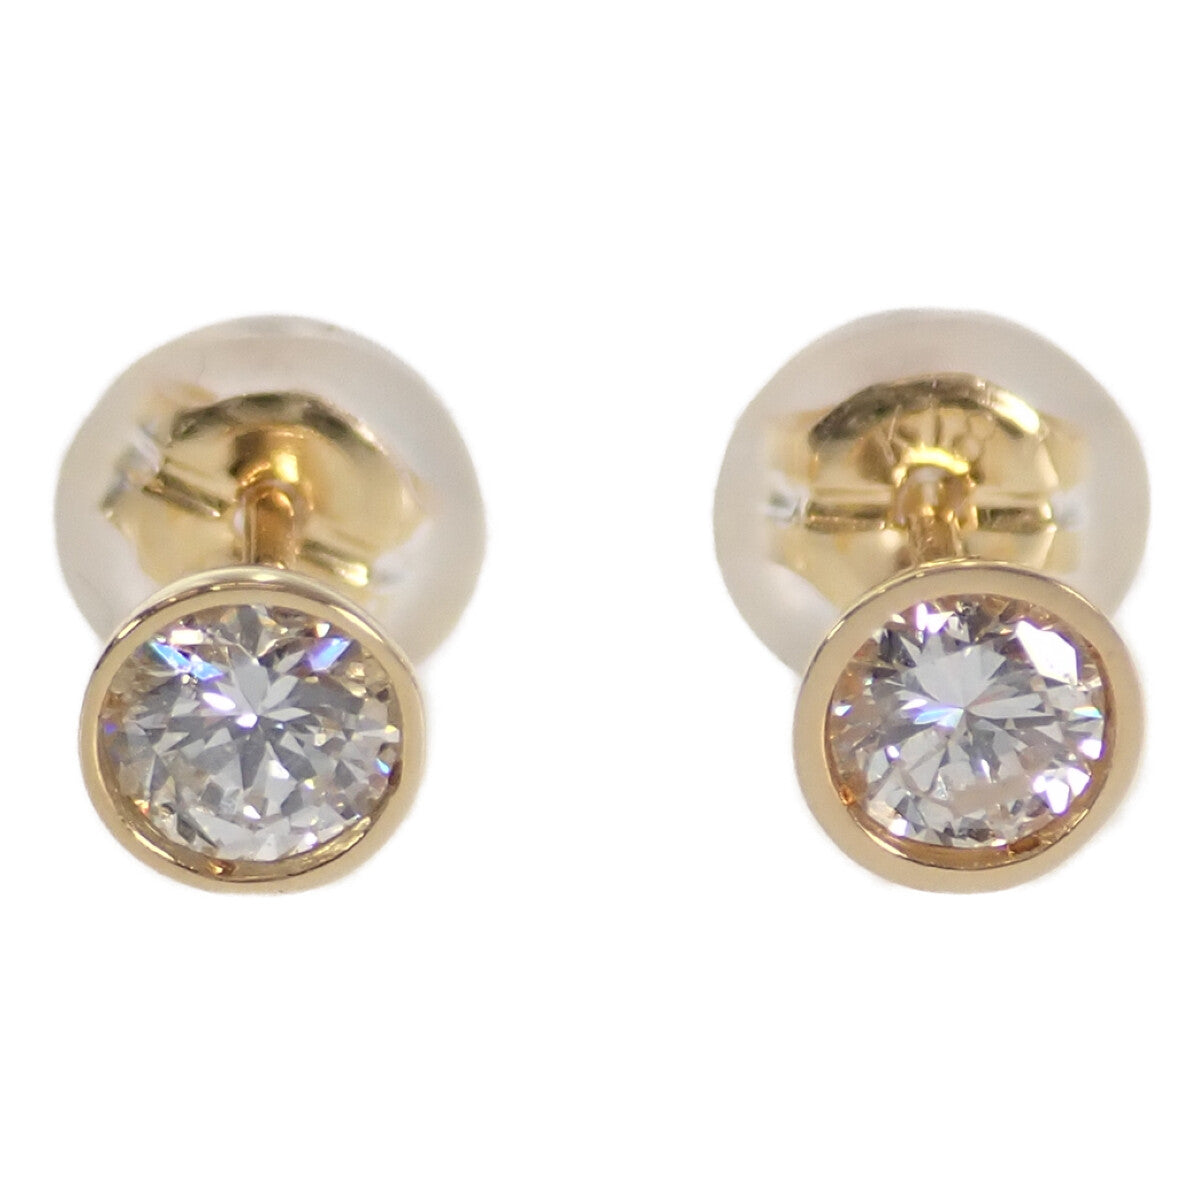 K18 Yellow Gold and Diamond Stud Earrings, Ladies', Diamond 0.157ct & 0.176ct, Preowned